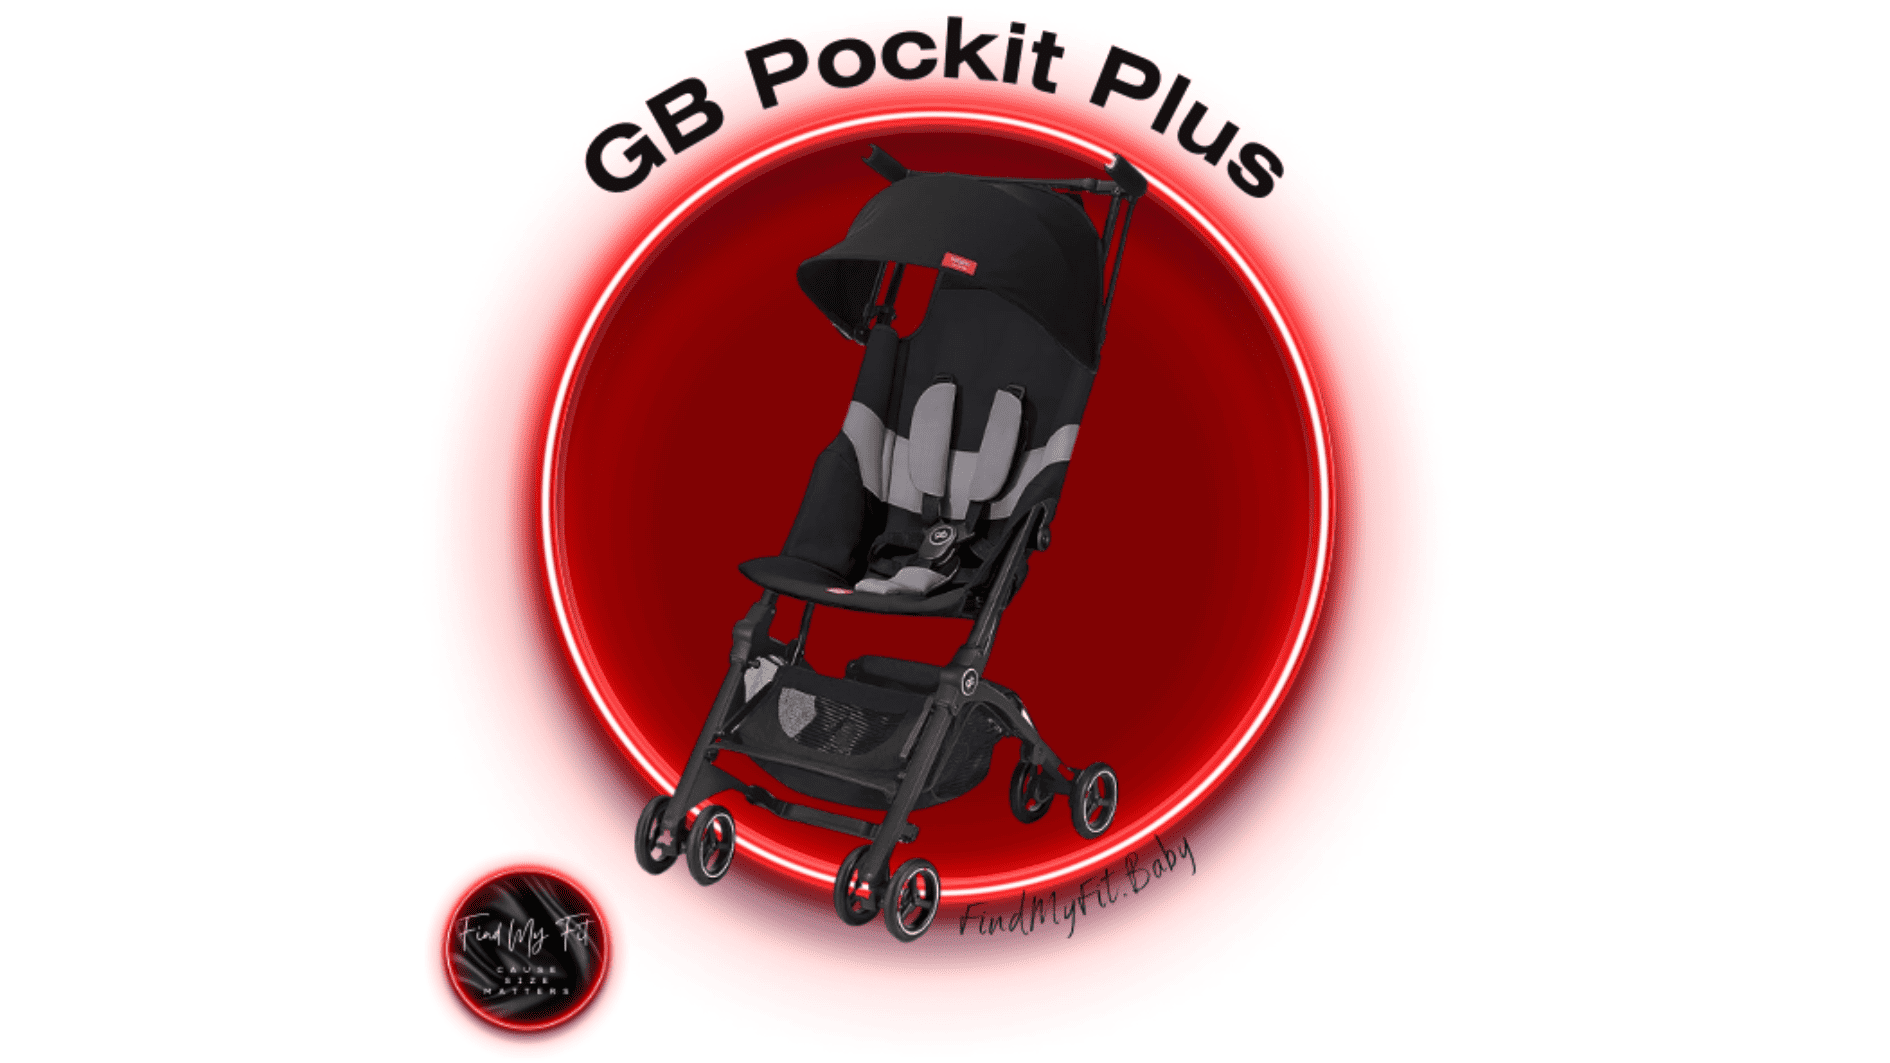 Gb Pockit Plus